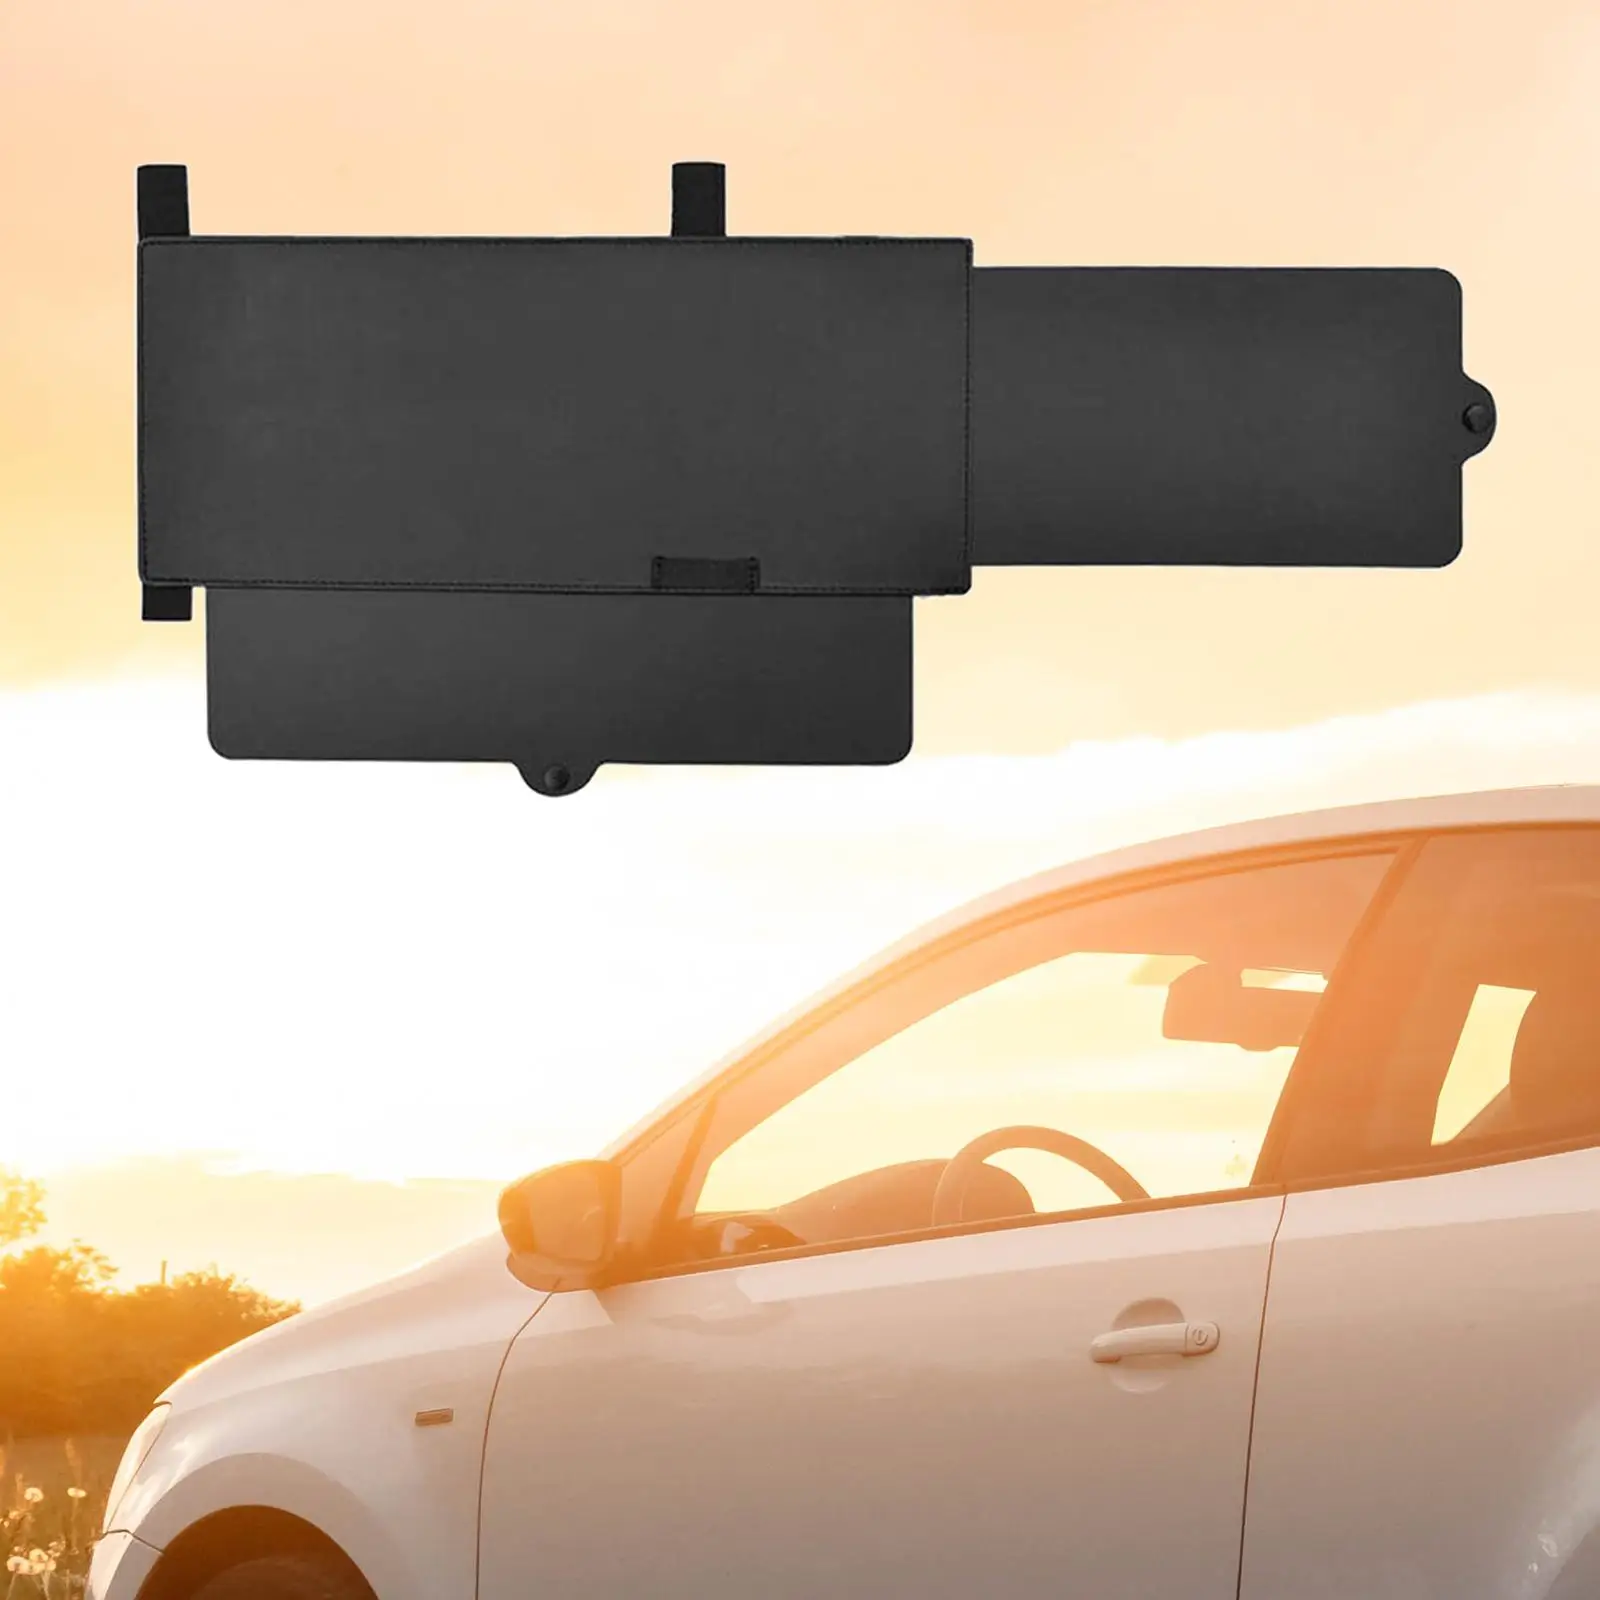 Retractable sun Visor Multifunction Portable Black Universal for Vehicle